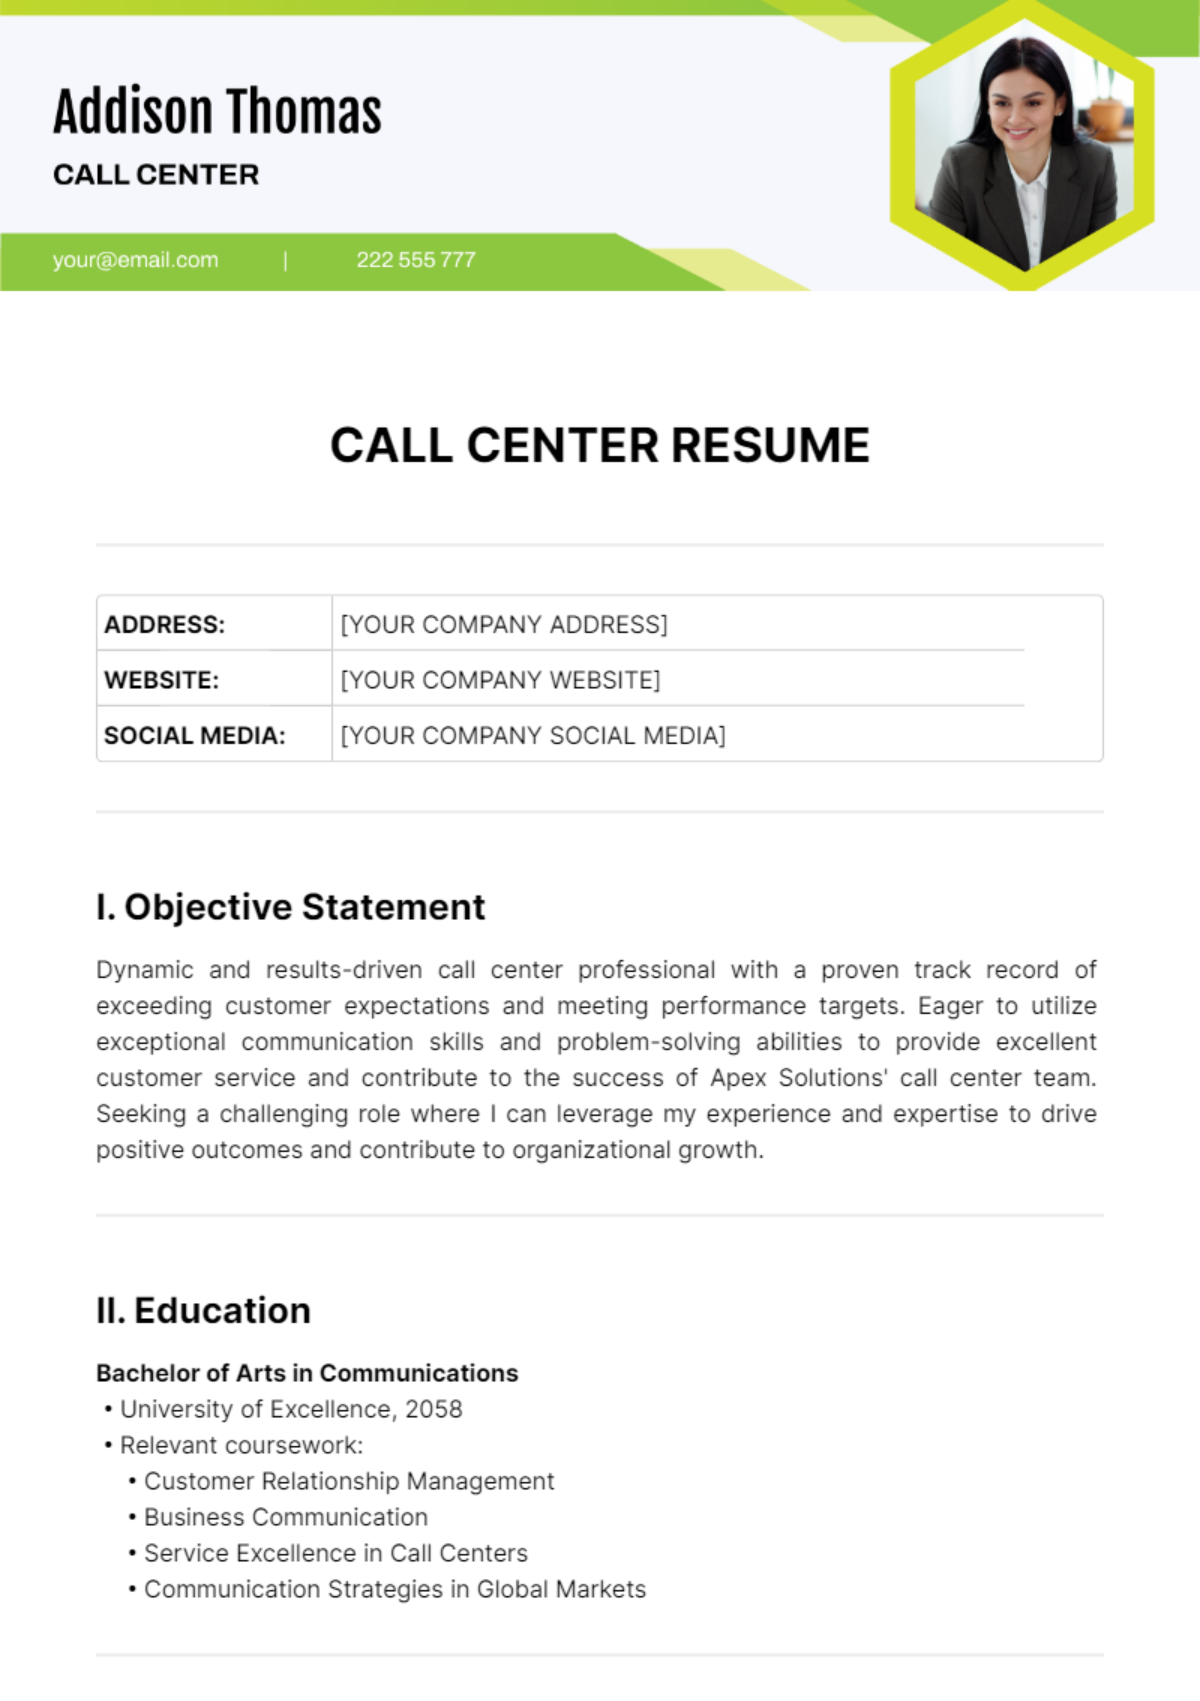 Call Center Resume Template